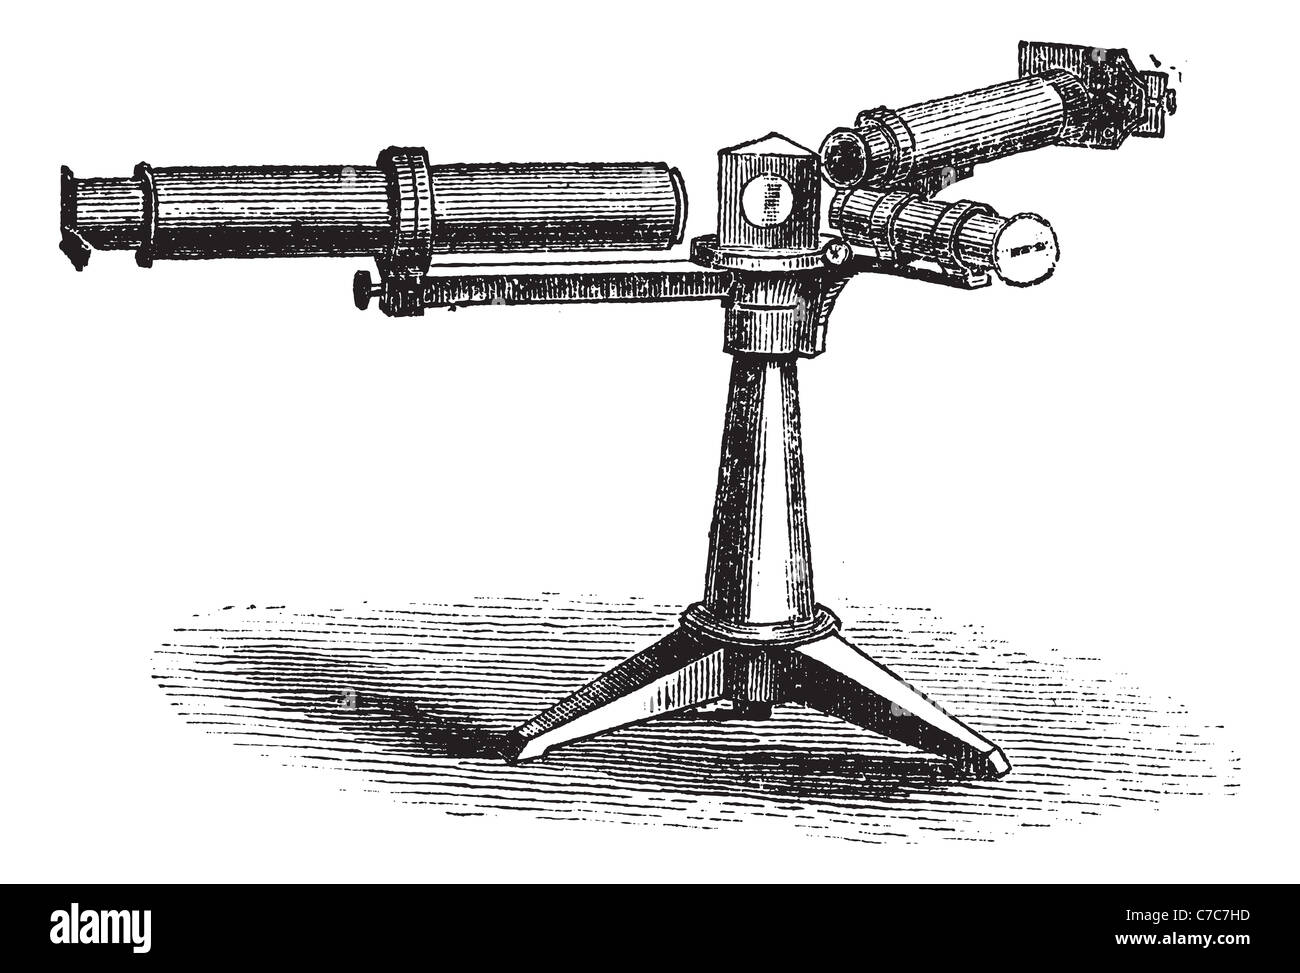 Spectrometer Or Spectroscope Stock Illustration - Download Image Now -  Electron Spectroscope, Mass Spectrometer, 19th Century - iStock